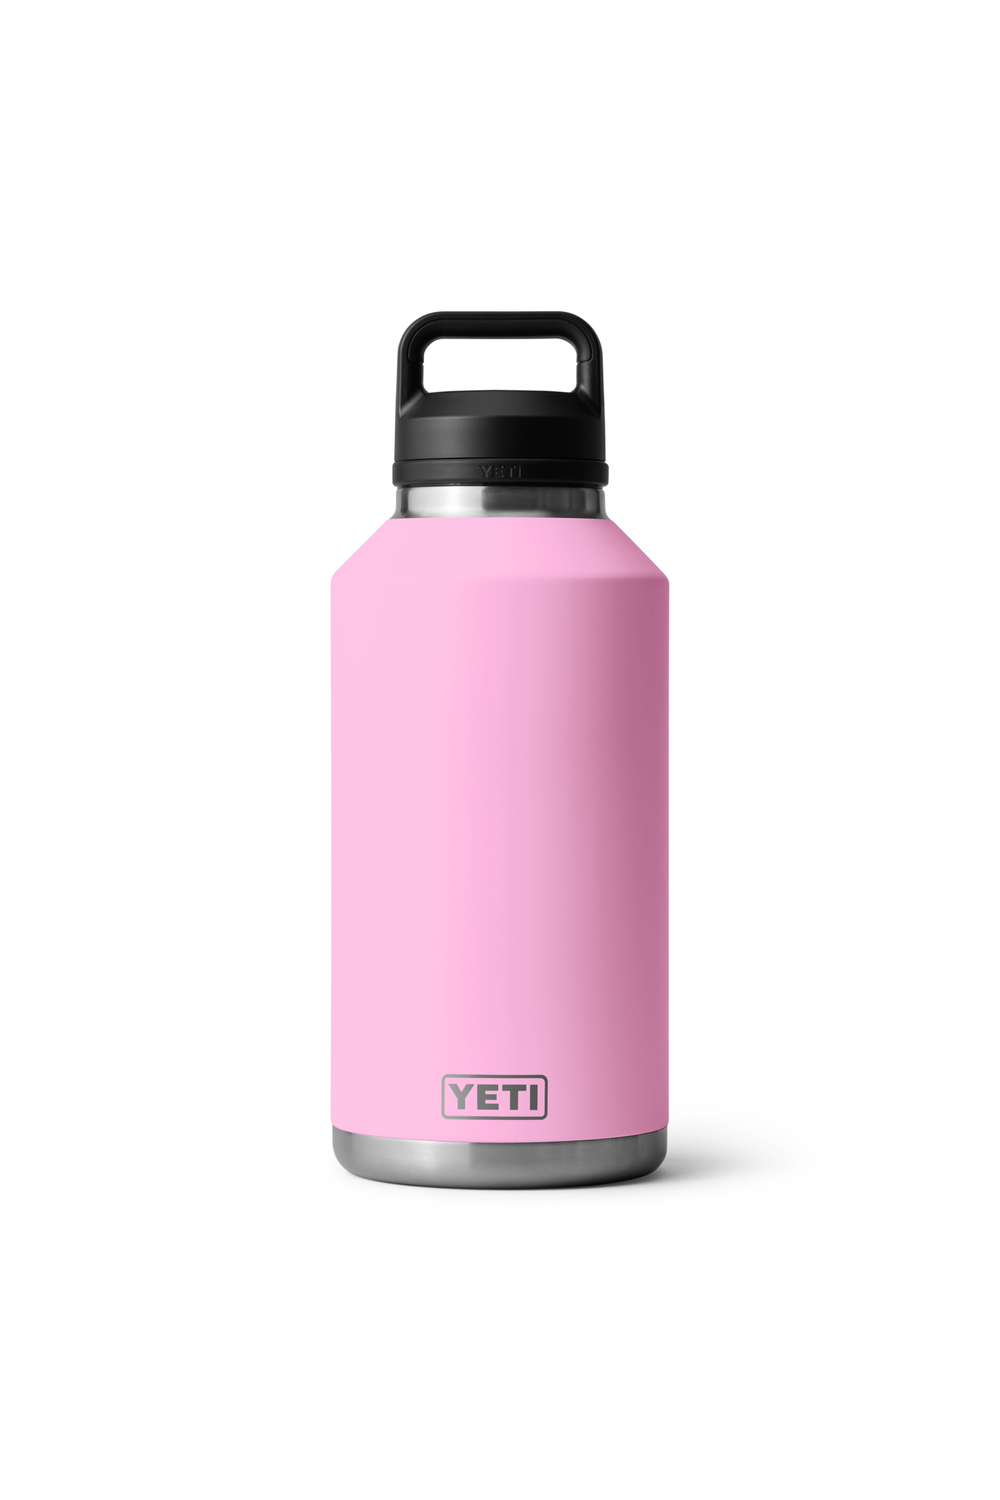 Yeti Rambler 64oz Bottle Chug Power Pink